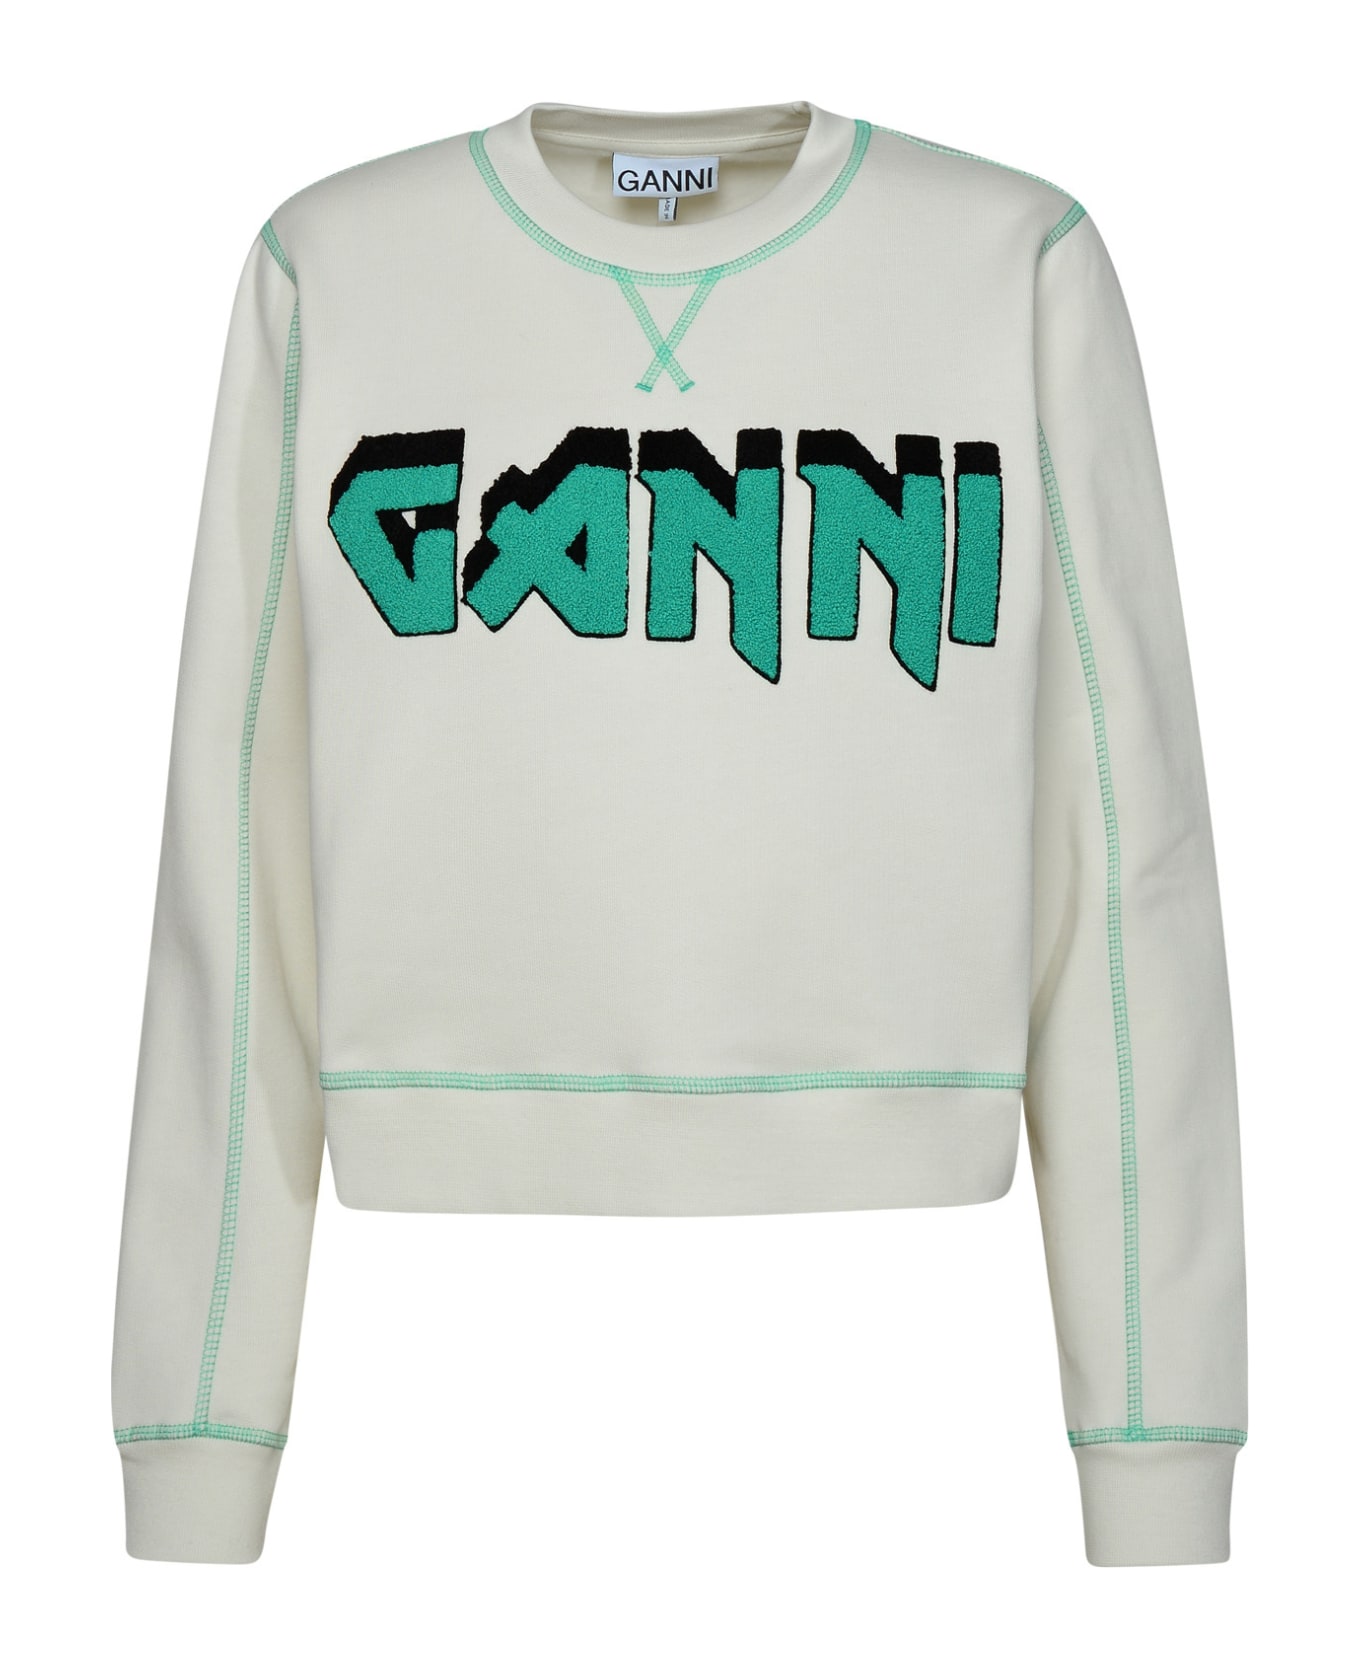 Ganni 'isoli Rock' Bio Ivory Cotton Sweatshirt - Ivory